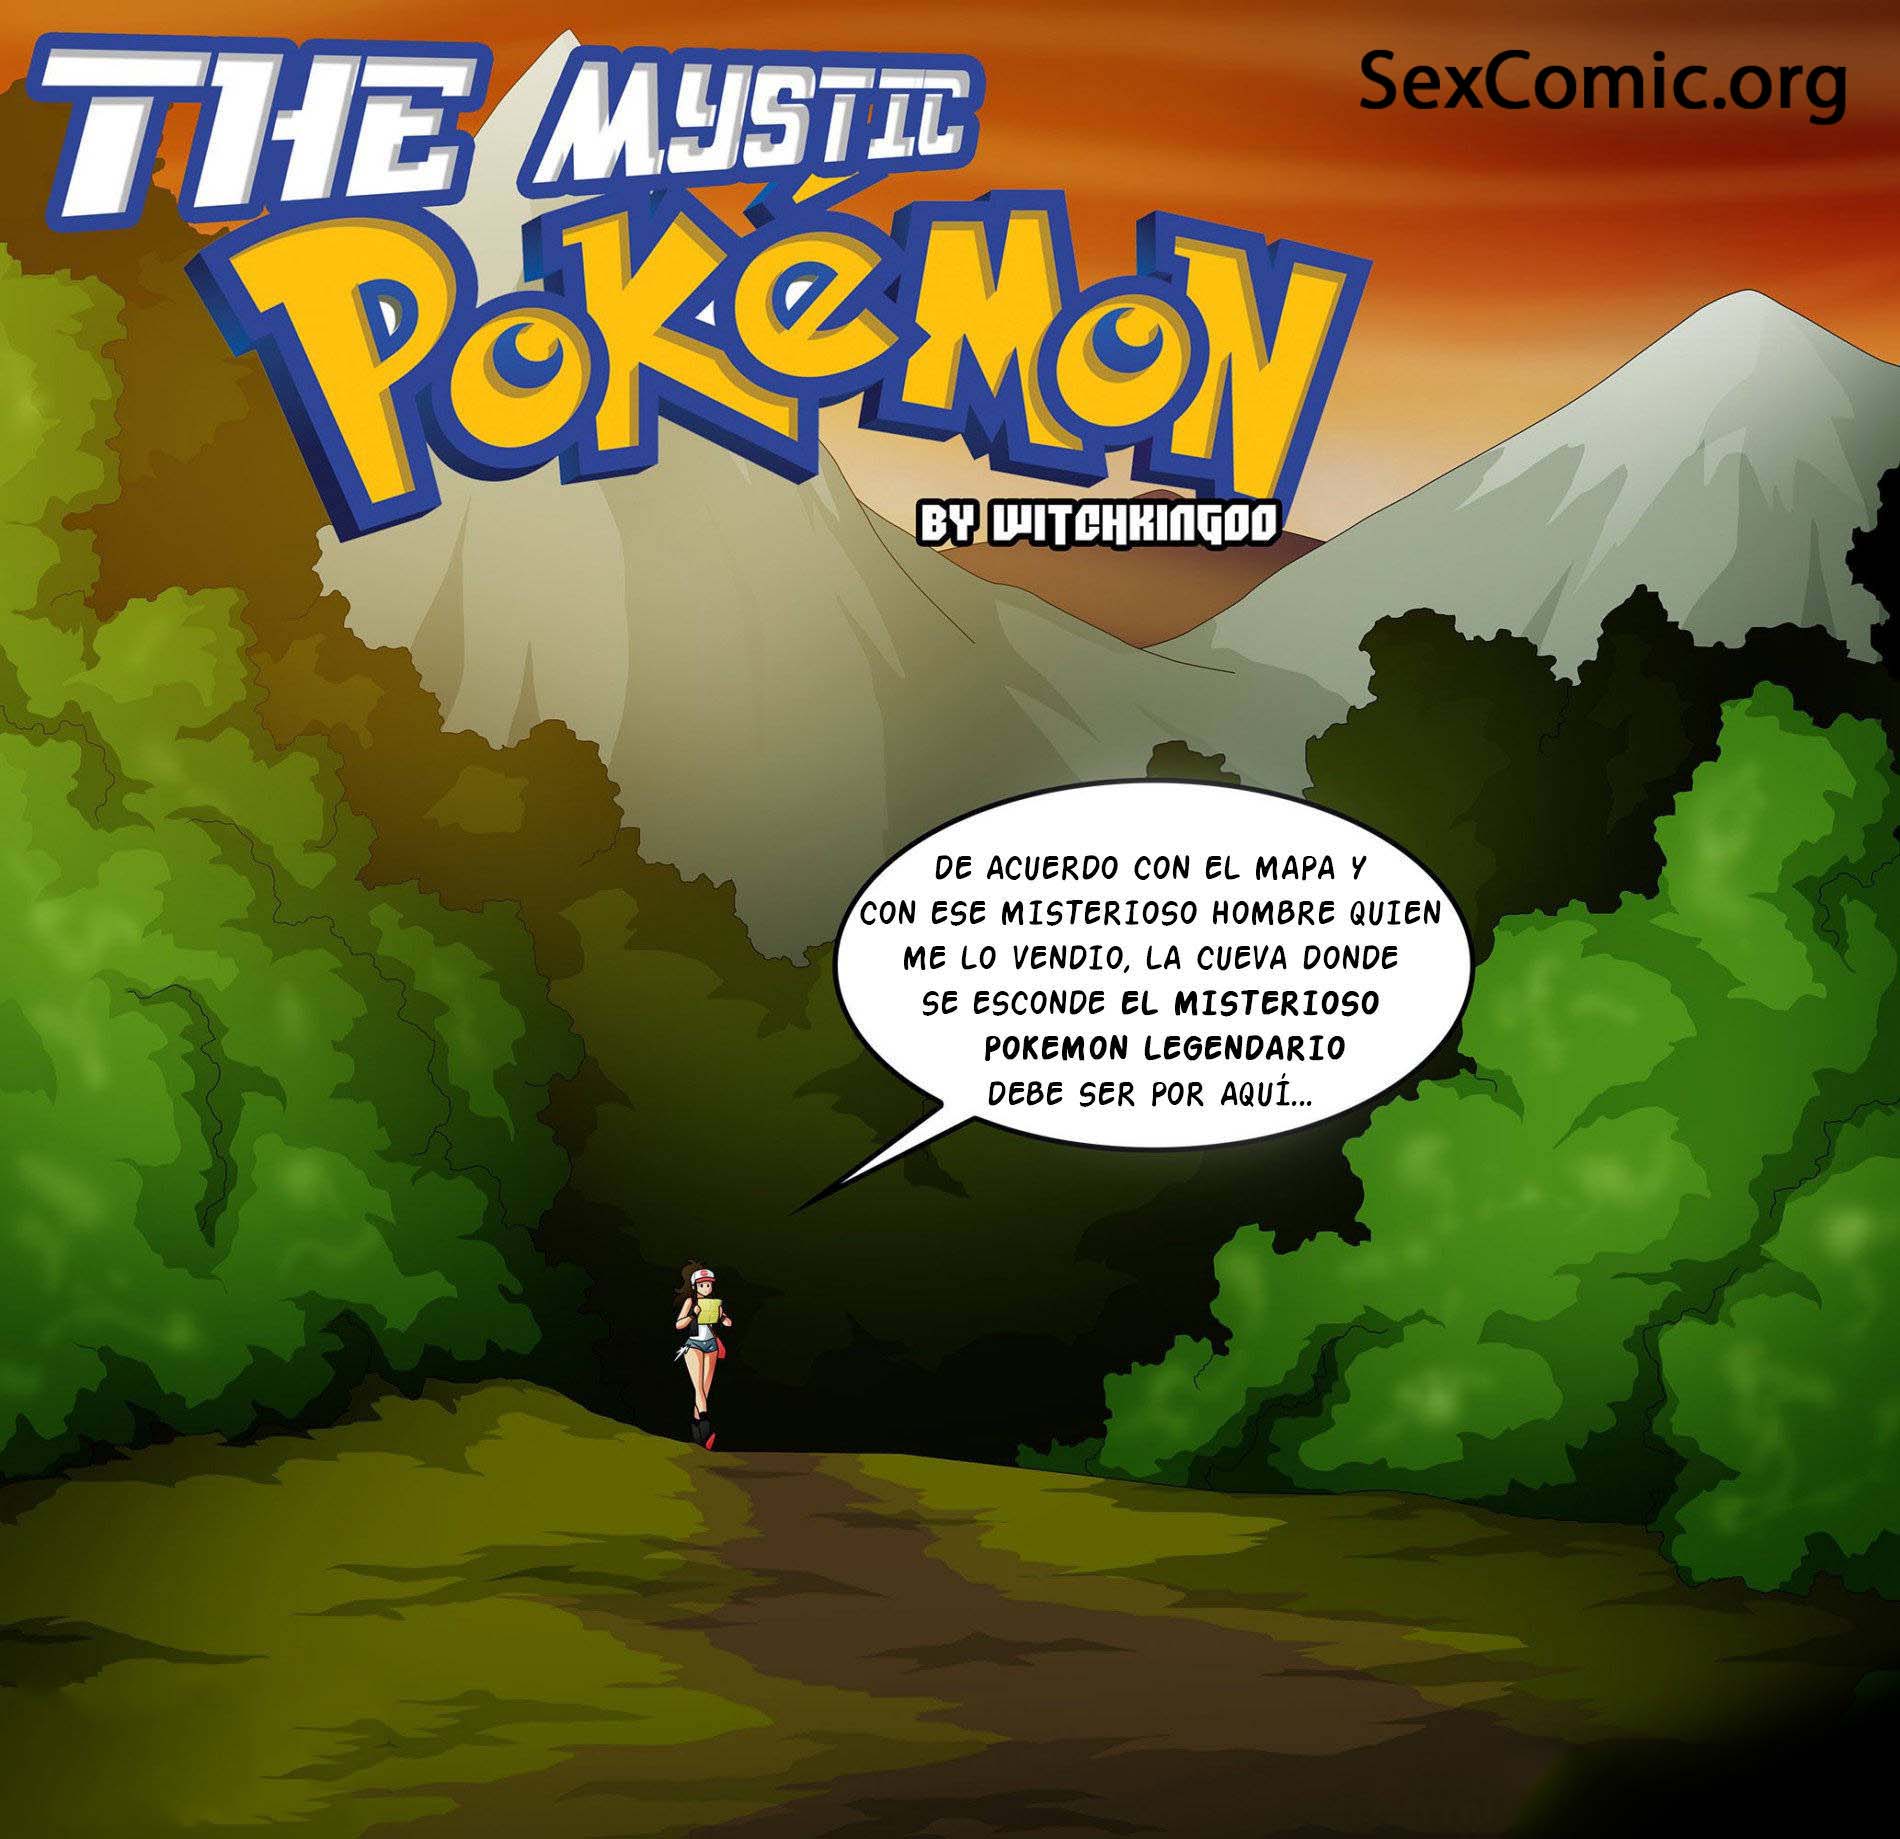 Mystic Pokemon comic porno - pokemon-porno-comics-sexuales-pokemon-go-sexo (2)